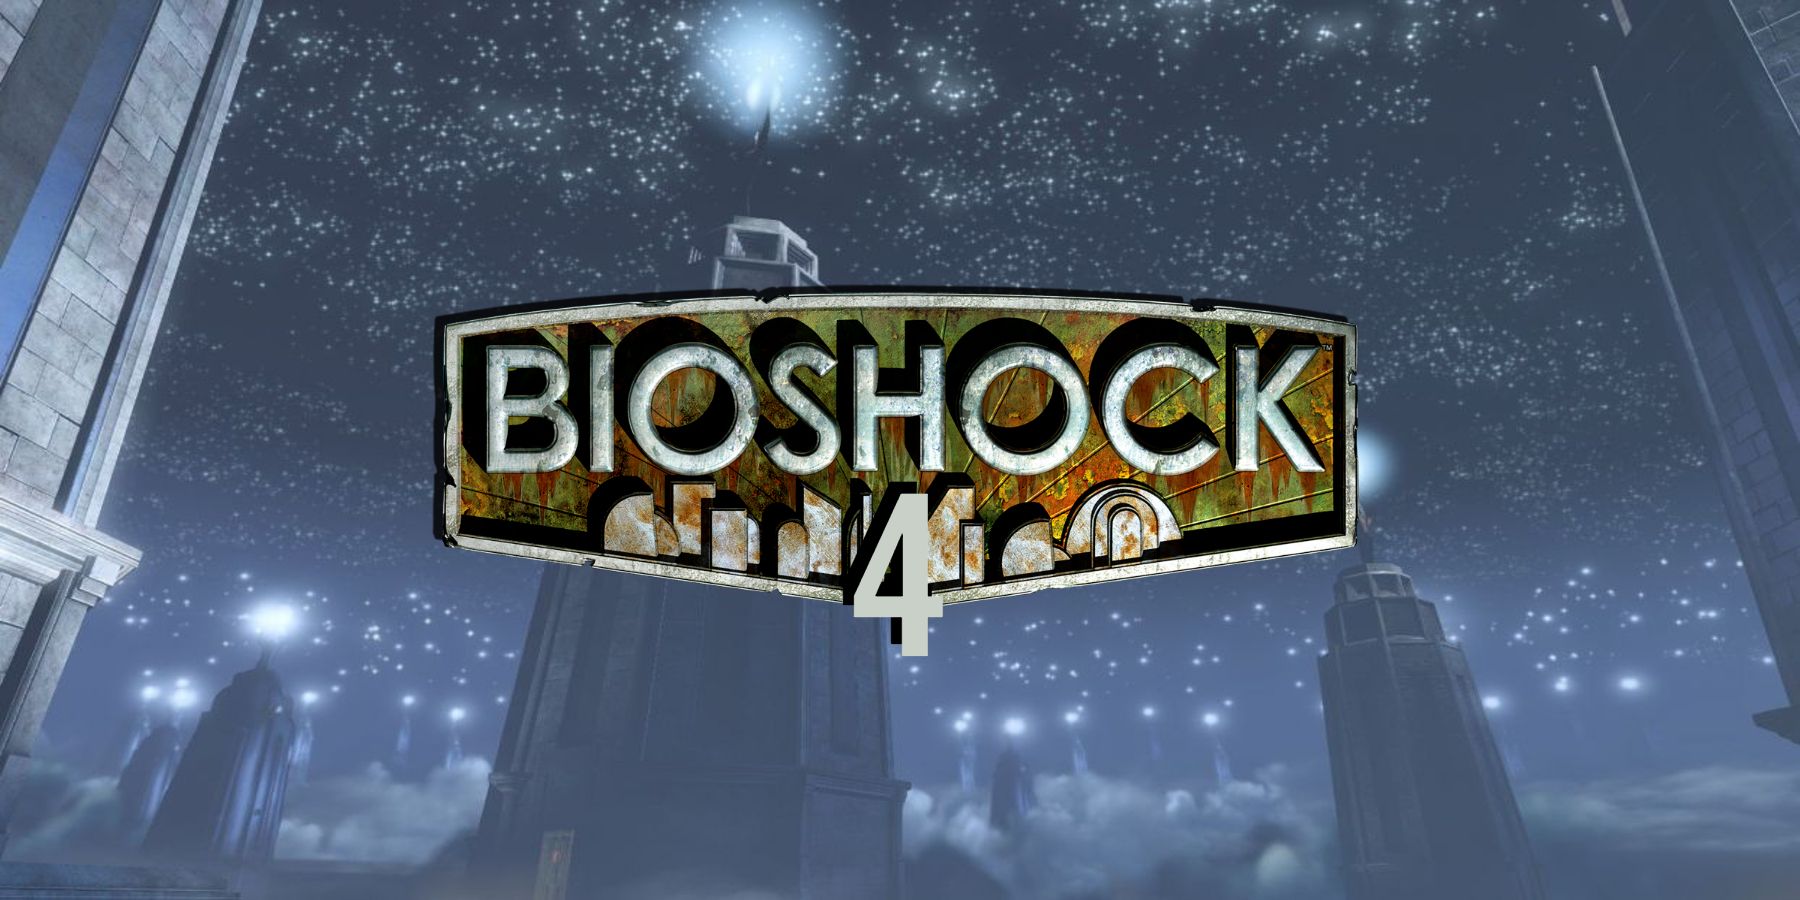 Bioshock 4 Mock-up logo over many lighthouses